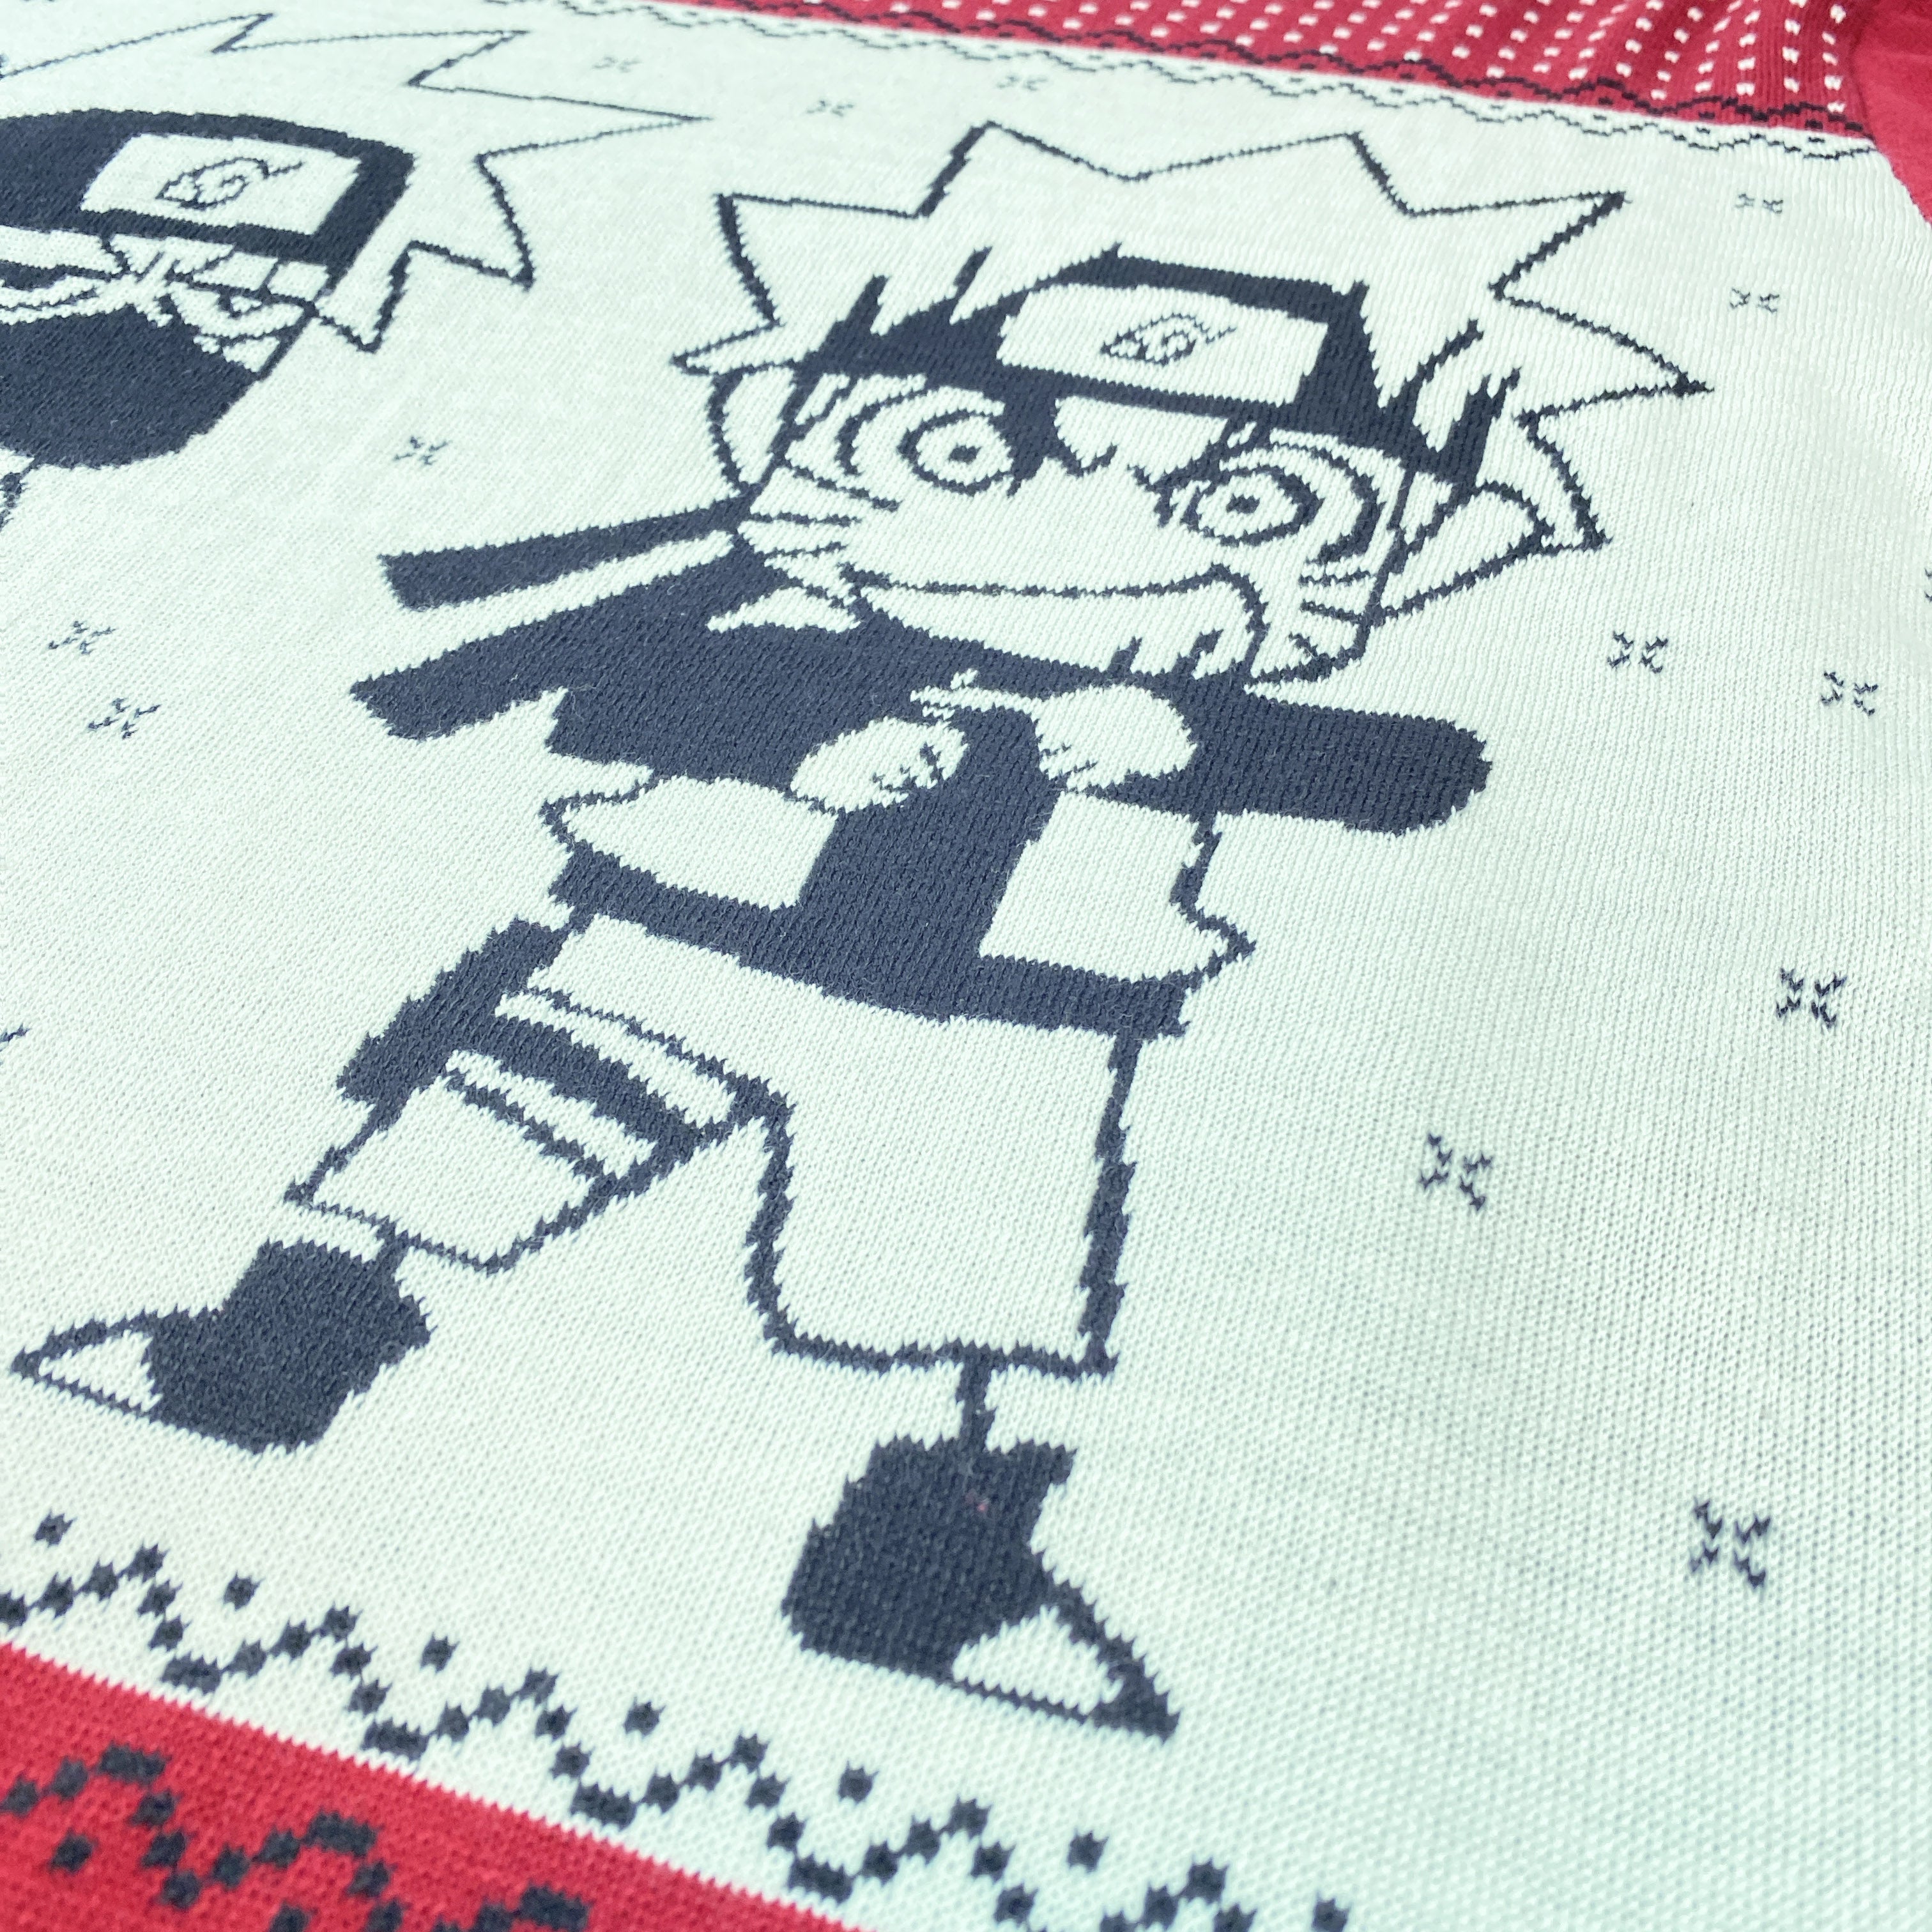 Naruto Shippuden - Naruto Kakashi Chibi Holiday Sweater - Crunchyroll Exclusive! image count 4